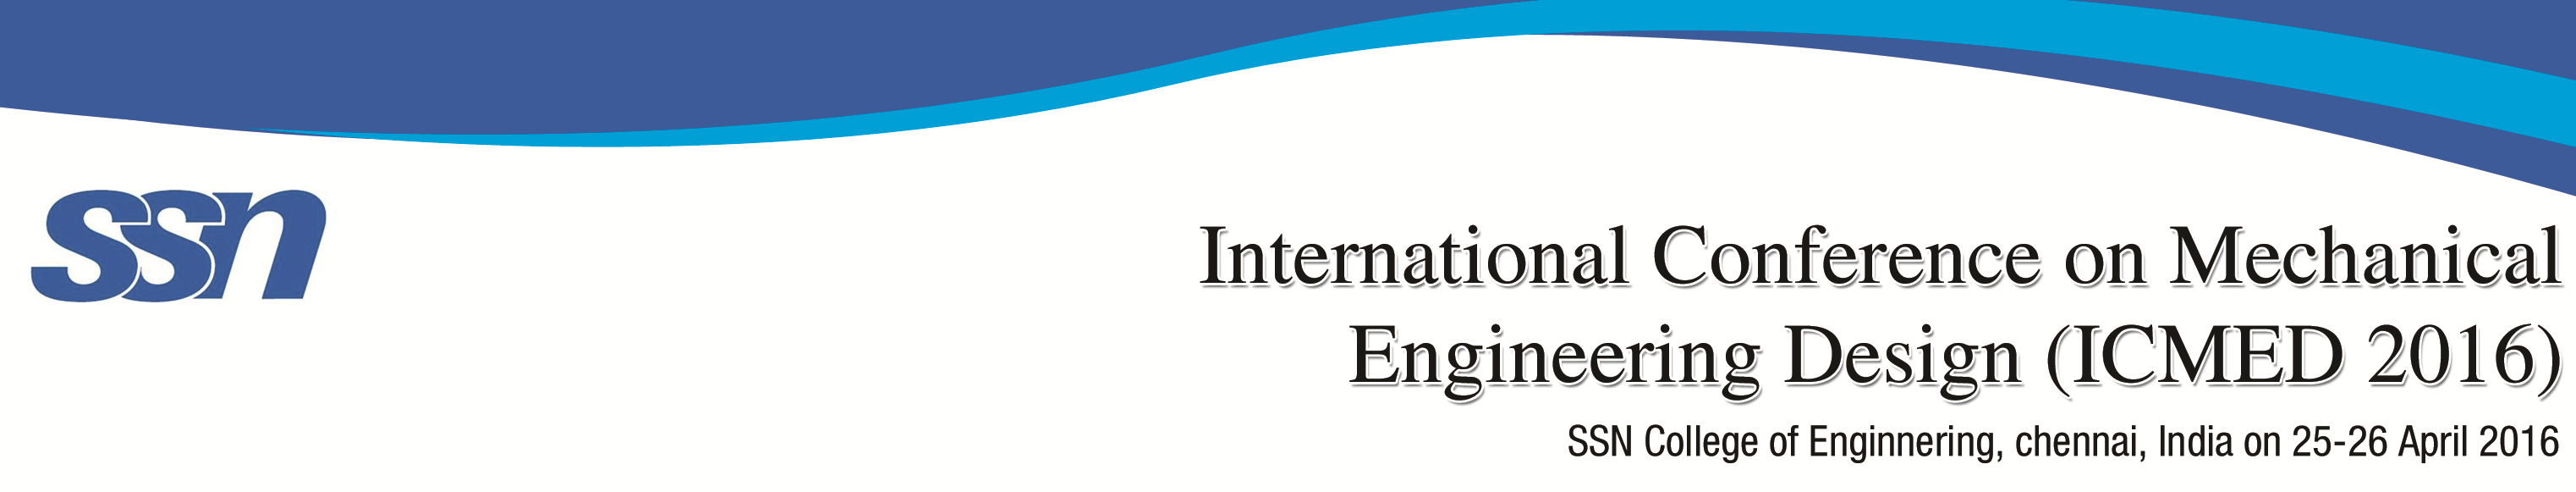 International Conference on Mechanical Engineering Design 2016, Chennai, Tamil Nadu, India